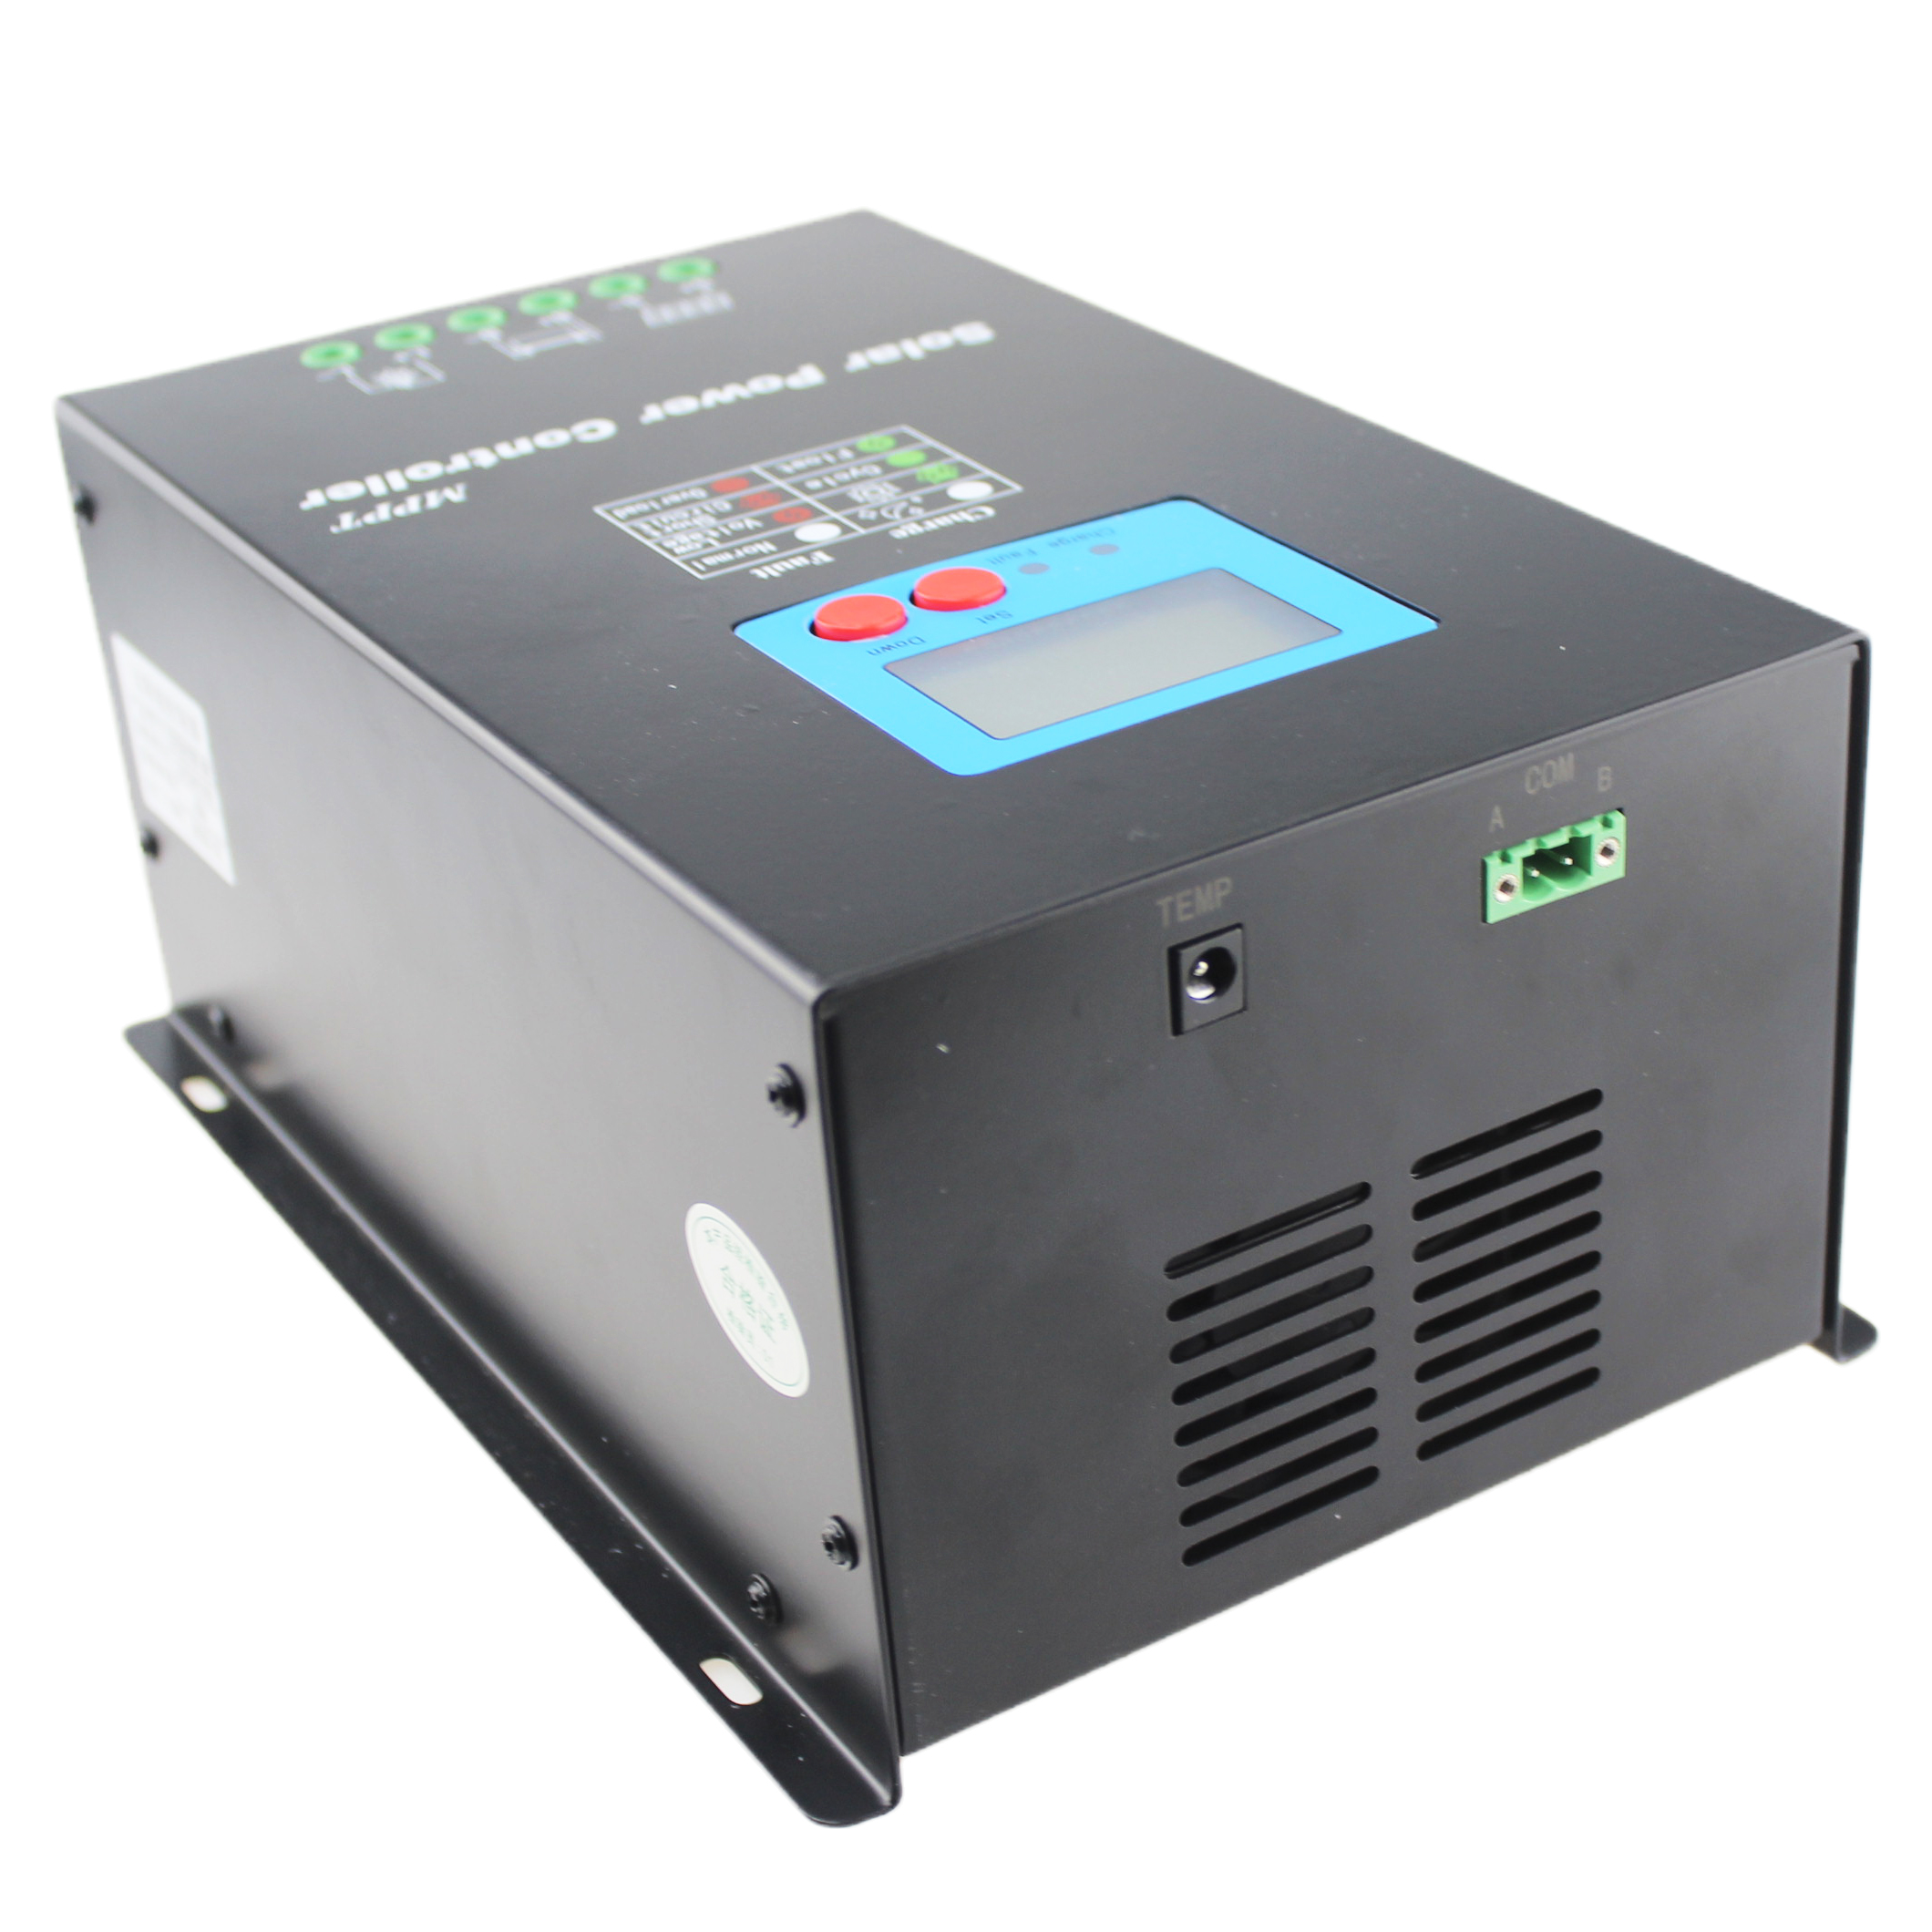 MPPT 40A DC36V Solar Charge Controller Solar Panel Battery Controller SSM40A